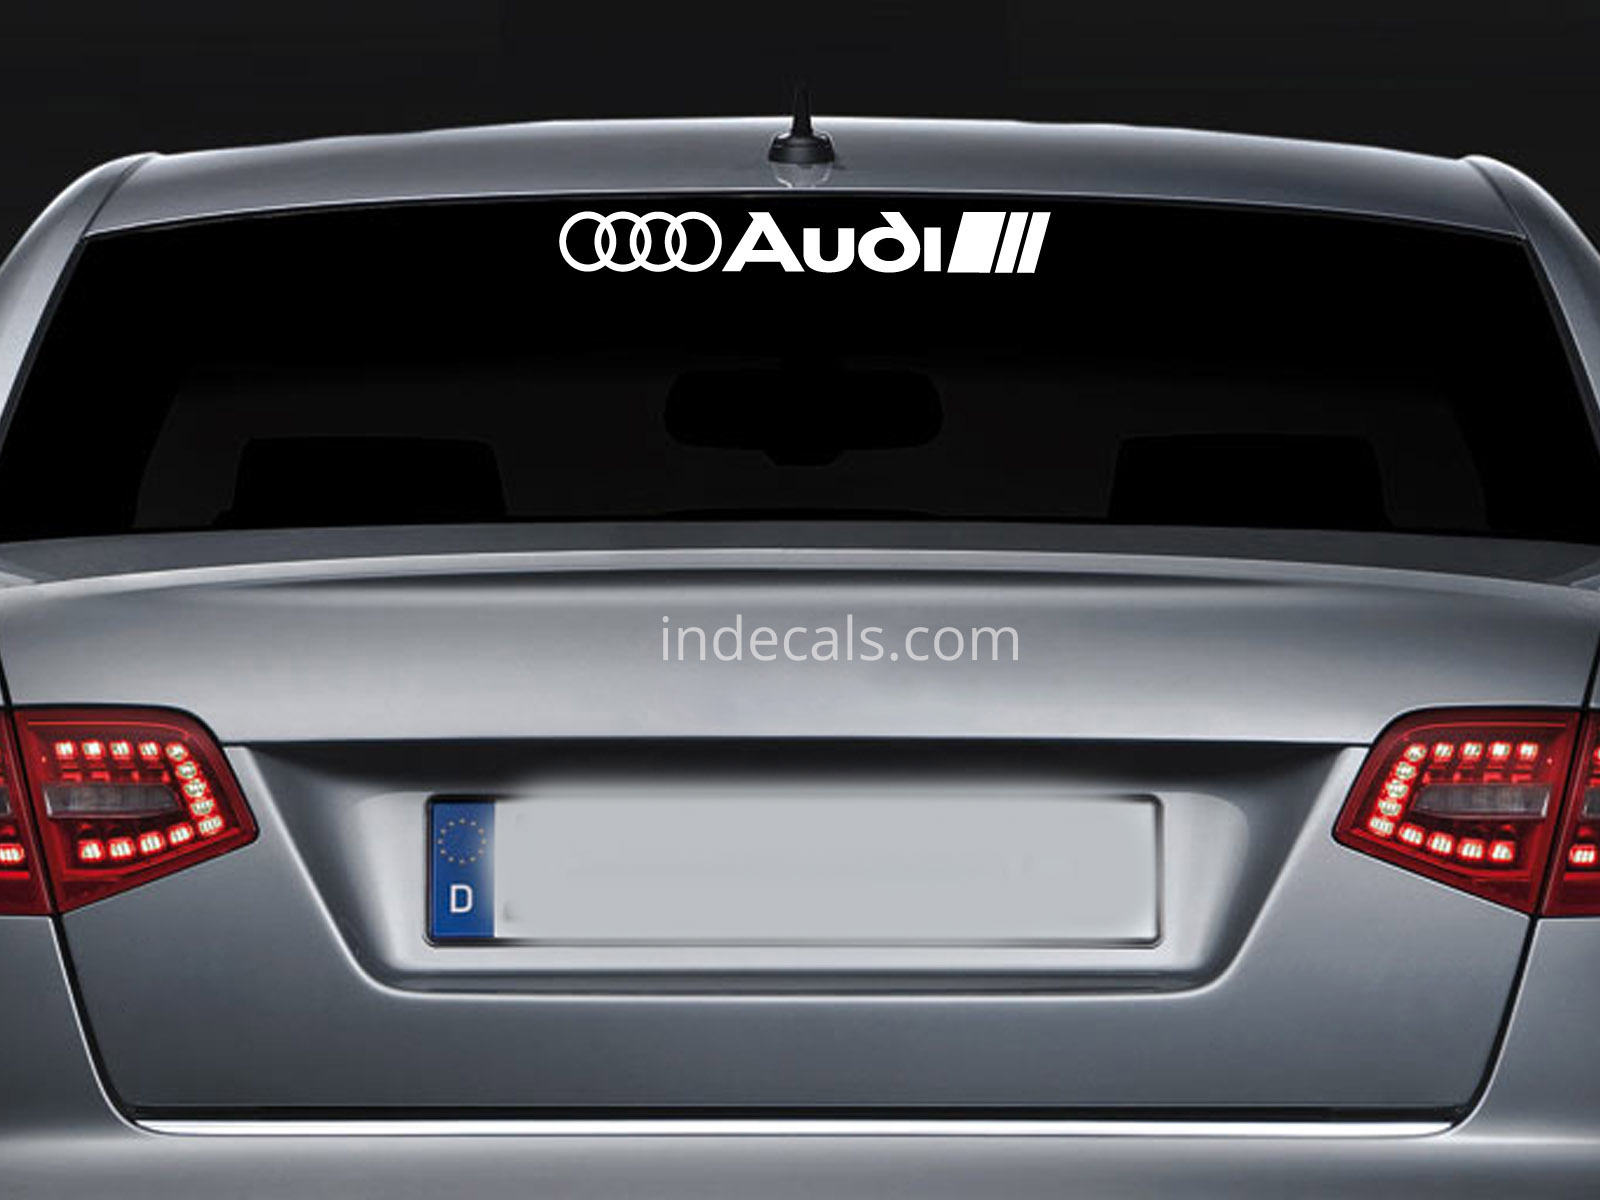 1 x Audi Performance Sticker for Windshield or Back Window - Black 